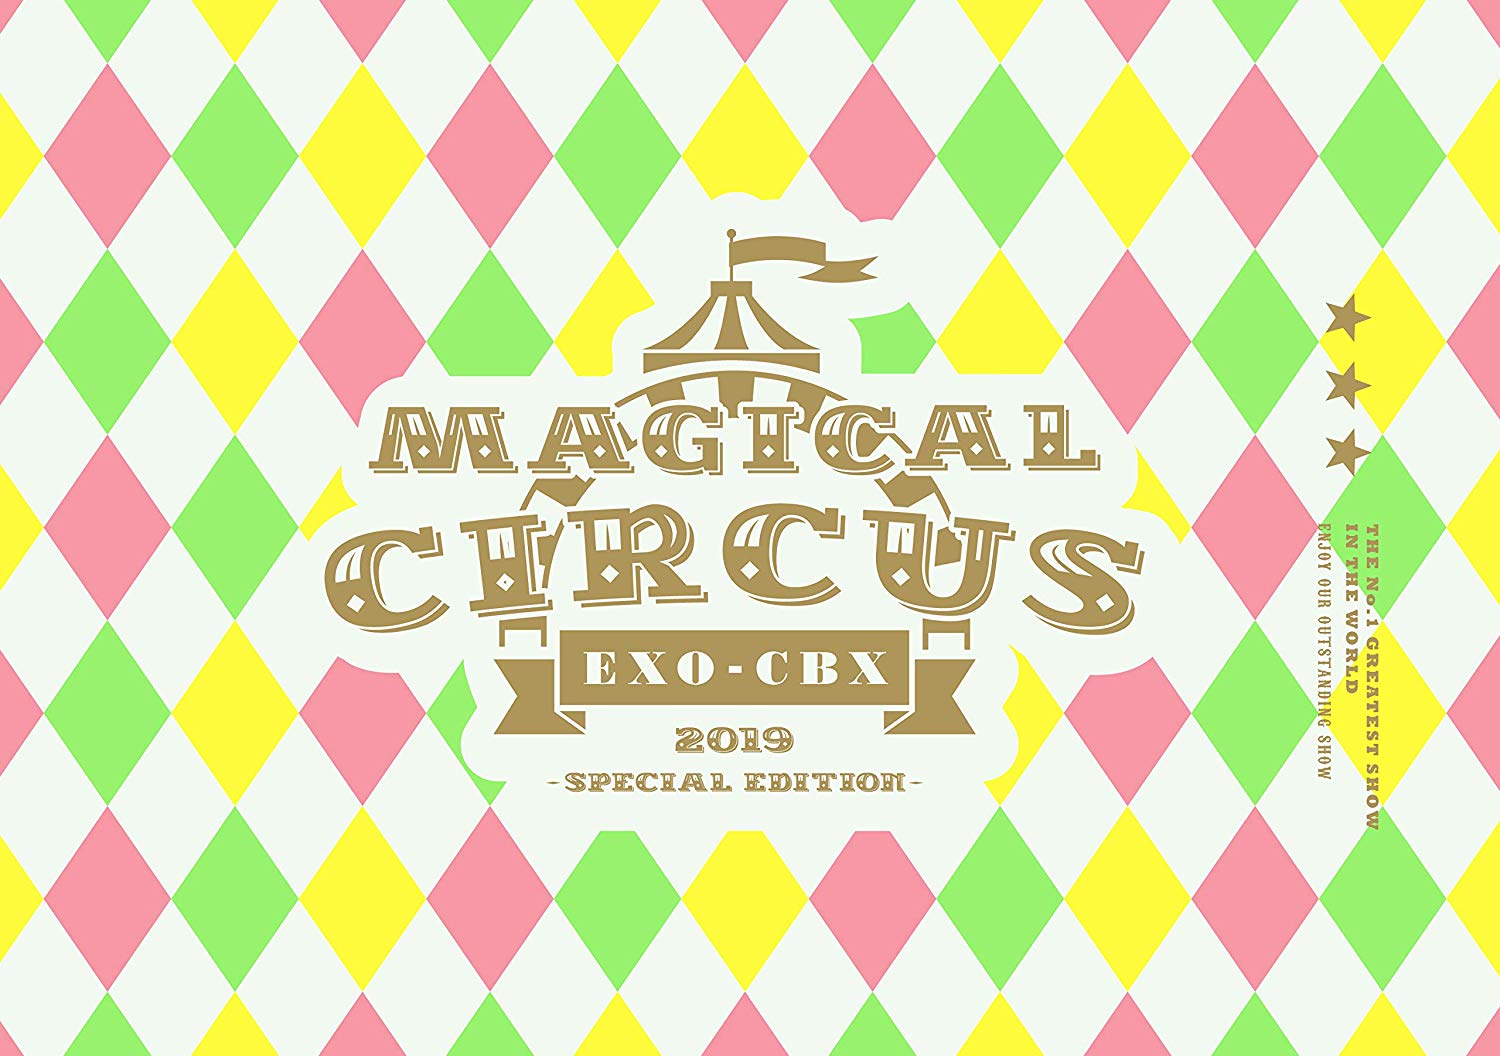 EXO-CBX日本演唱会 EXO-CBX "MAGICAL CIRCUS" 2019 -Special Edition-